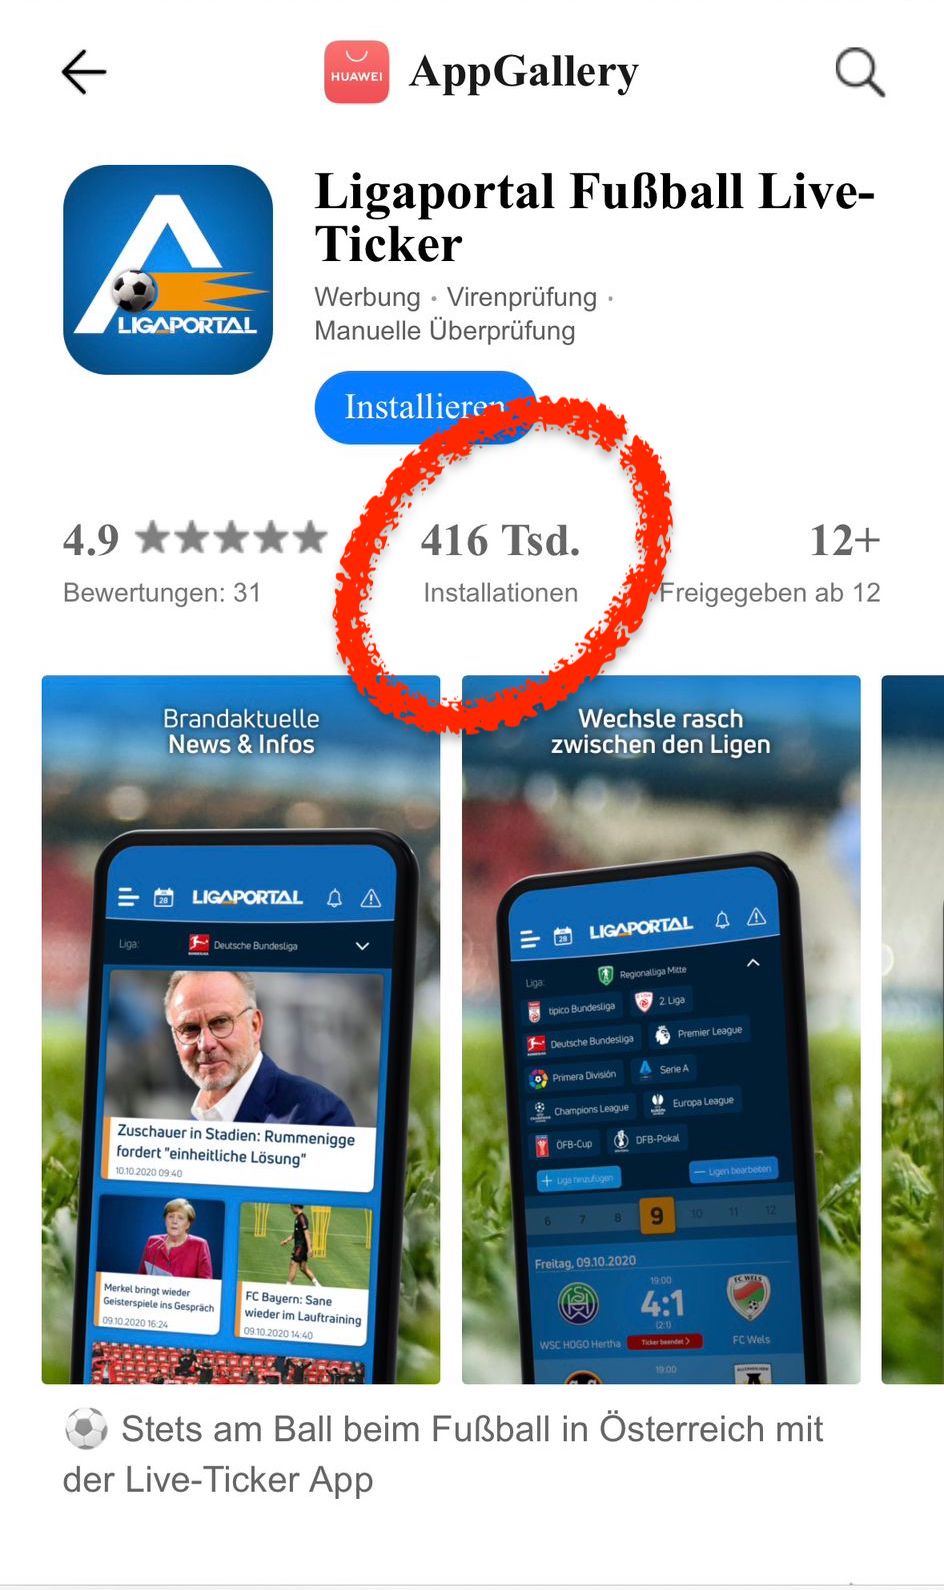 Downloads der Ligaportal App in der Huawei AppGallery